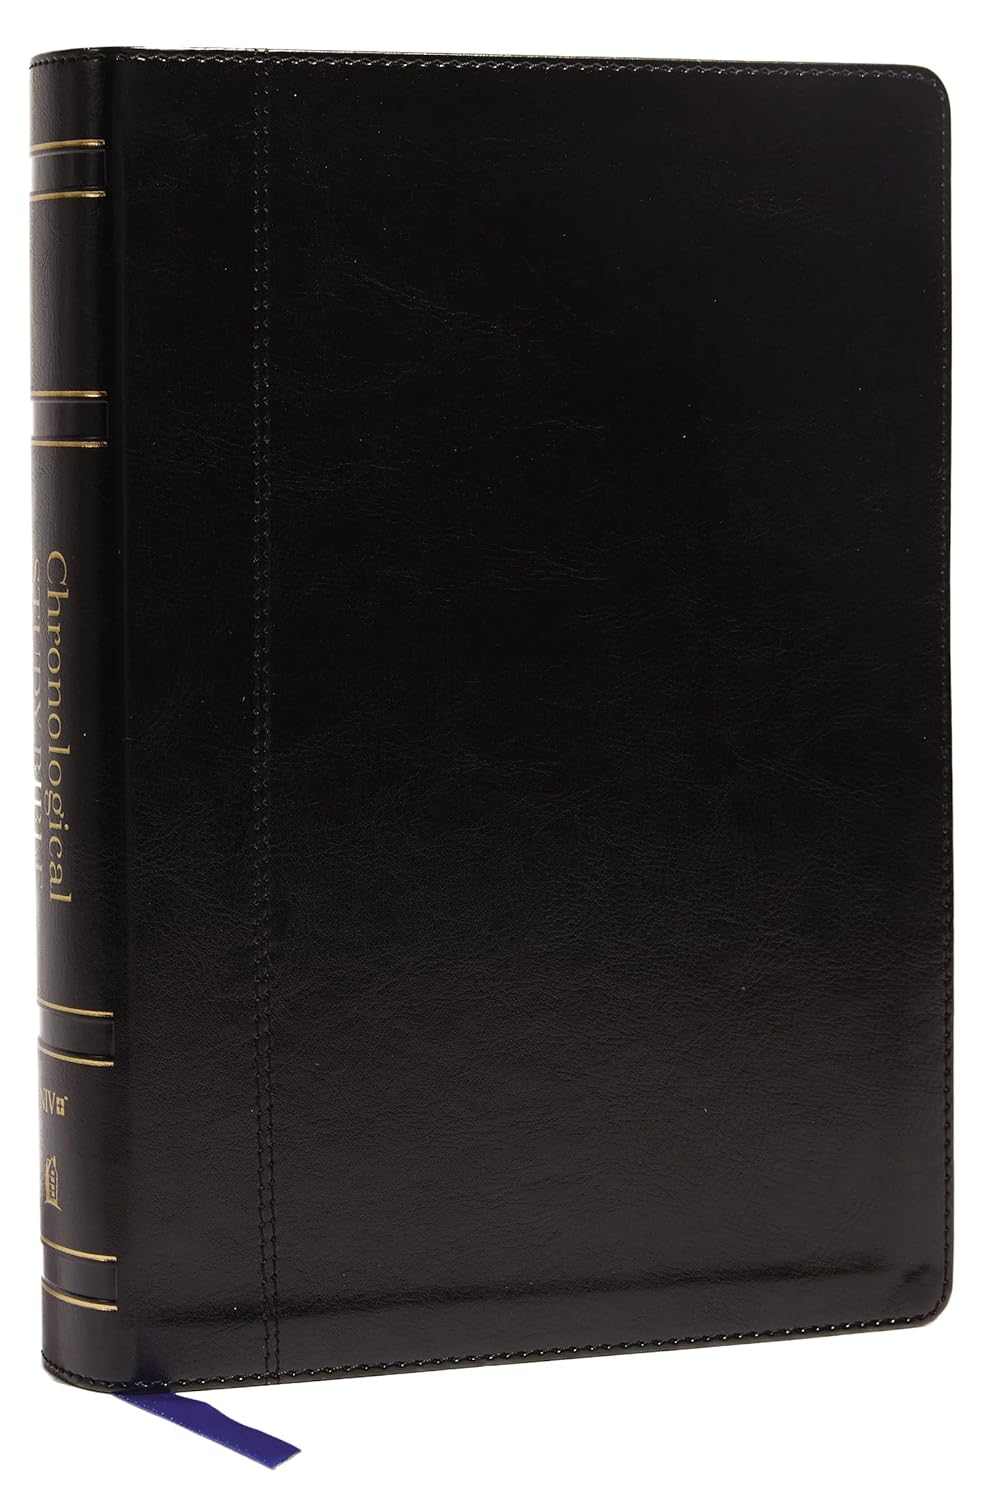 Holy Bible: New International Version, Black, Leathersoft, Chronological Study, Comfort Print Imitation Leather – Import